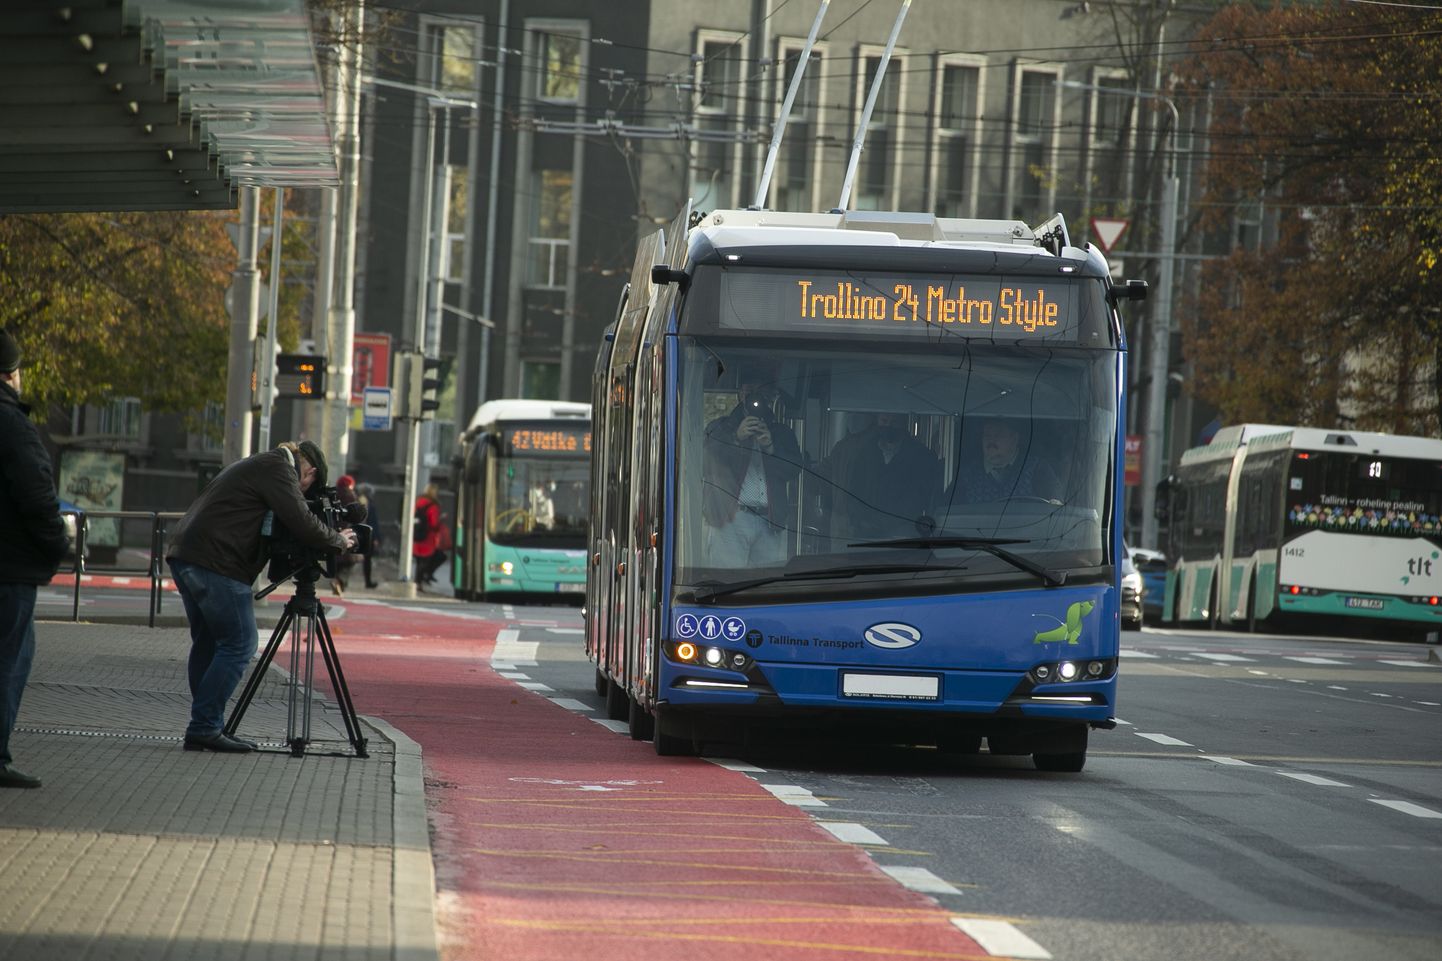 Uus trollibuss Trollino 24 MetroStyle.